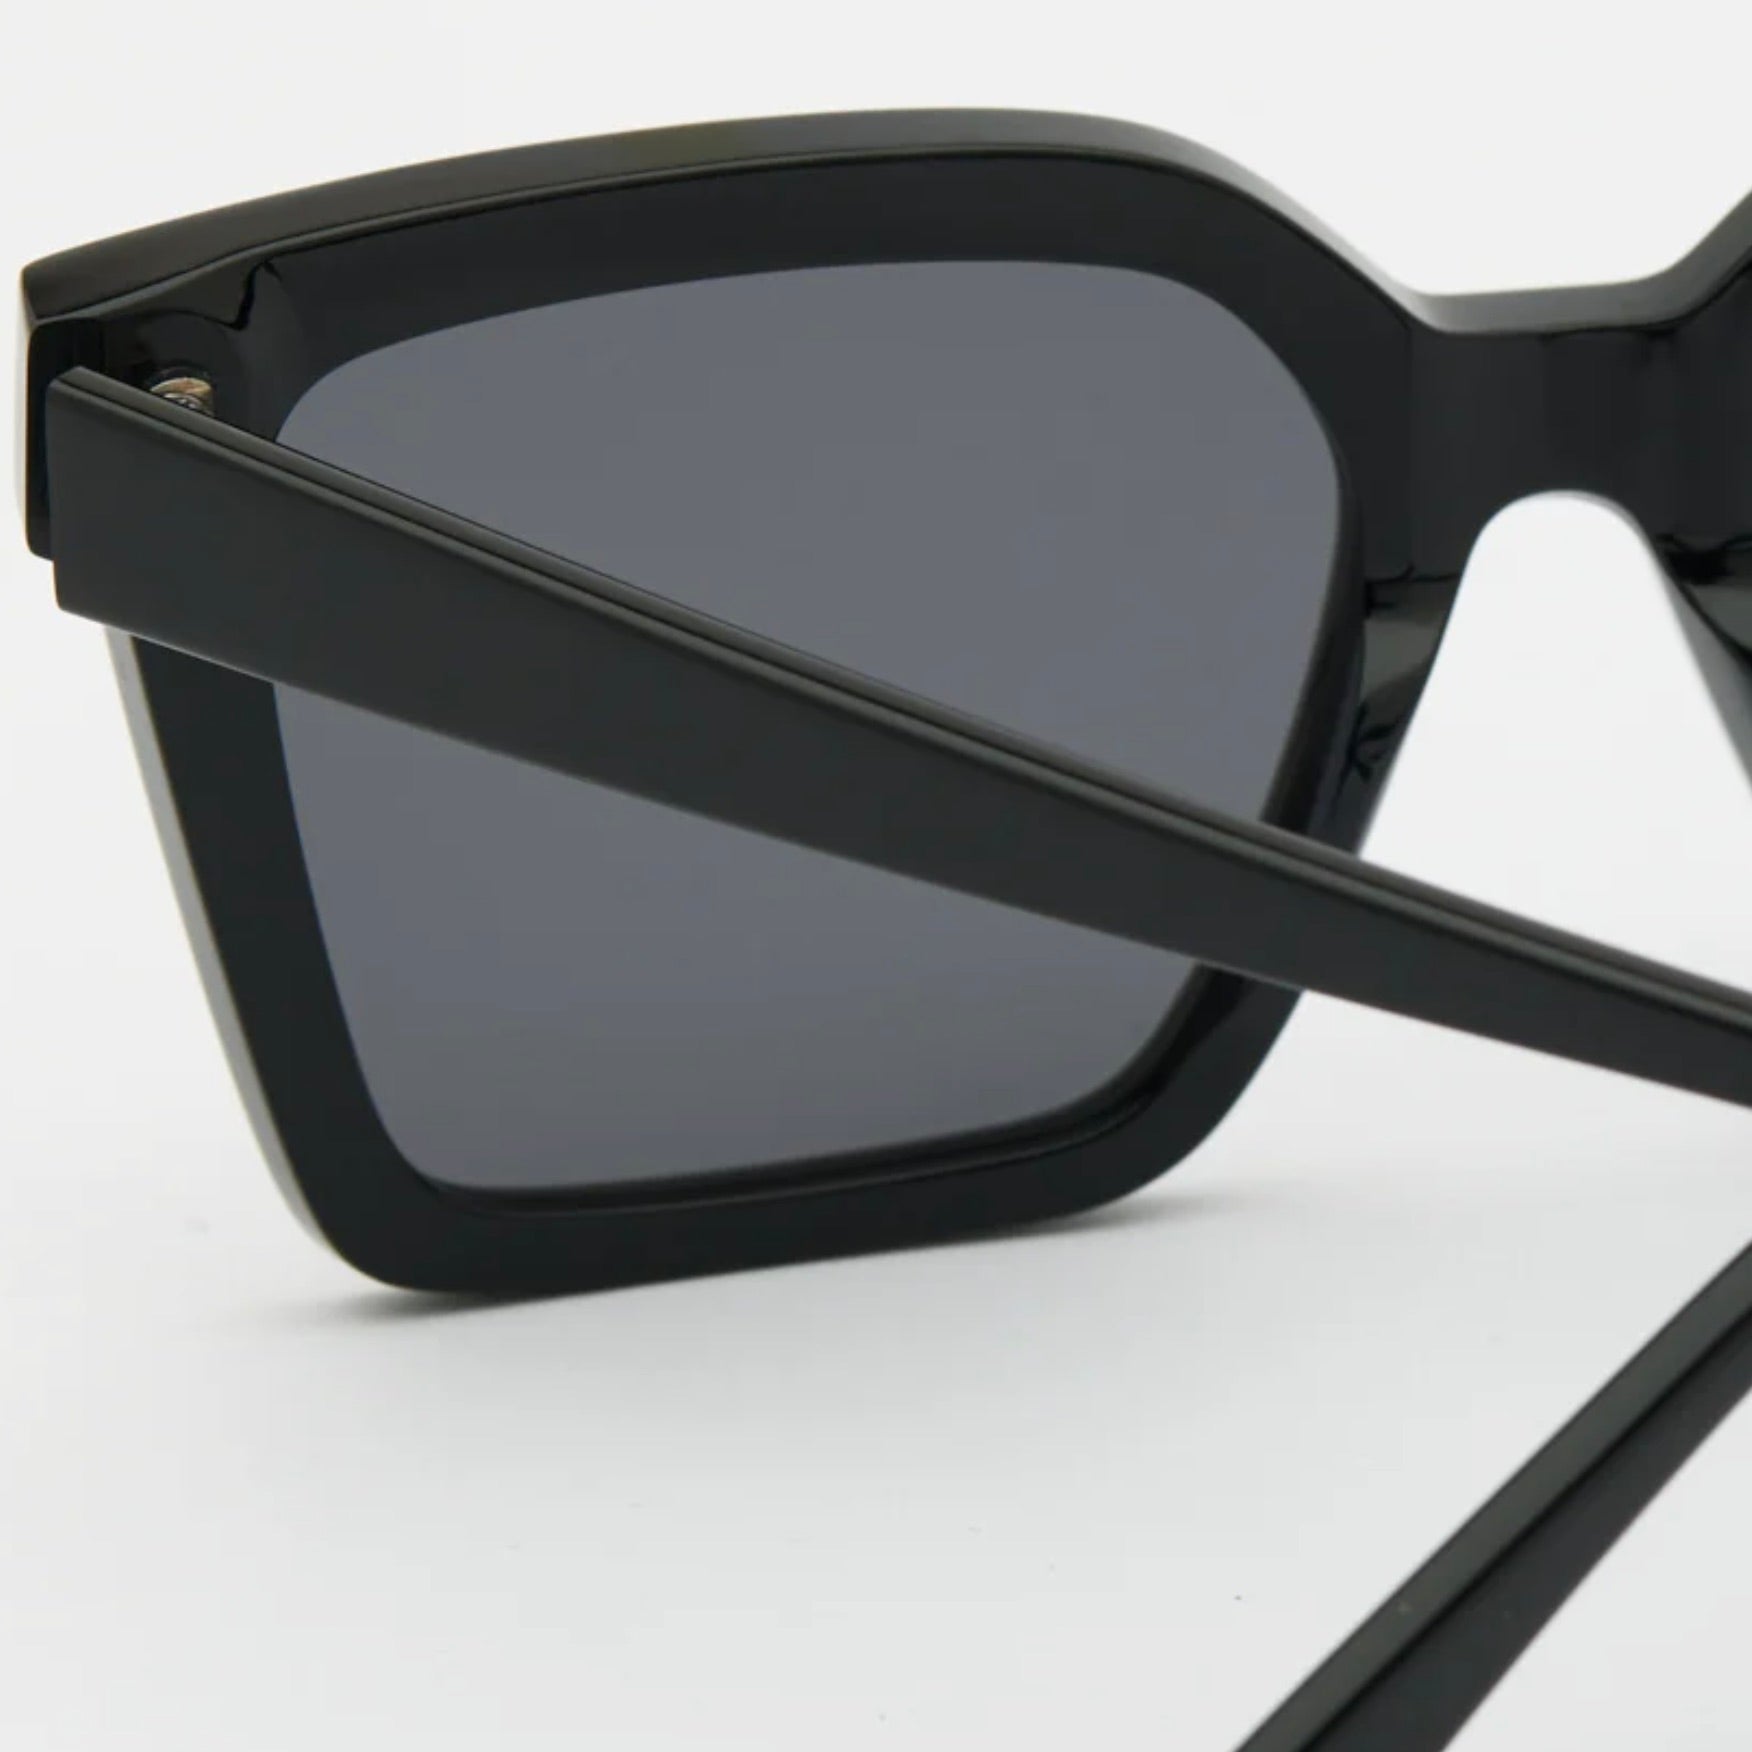 Black Ivy Reader Sunglasses